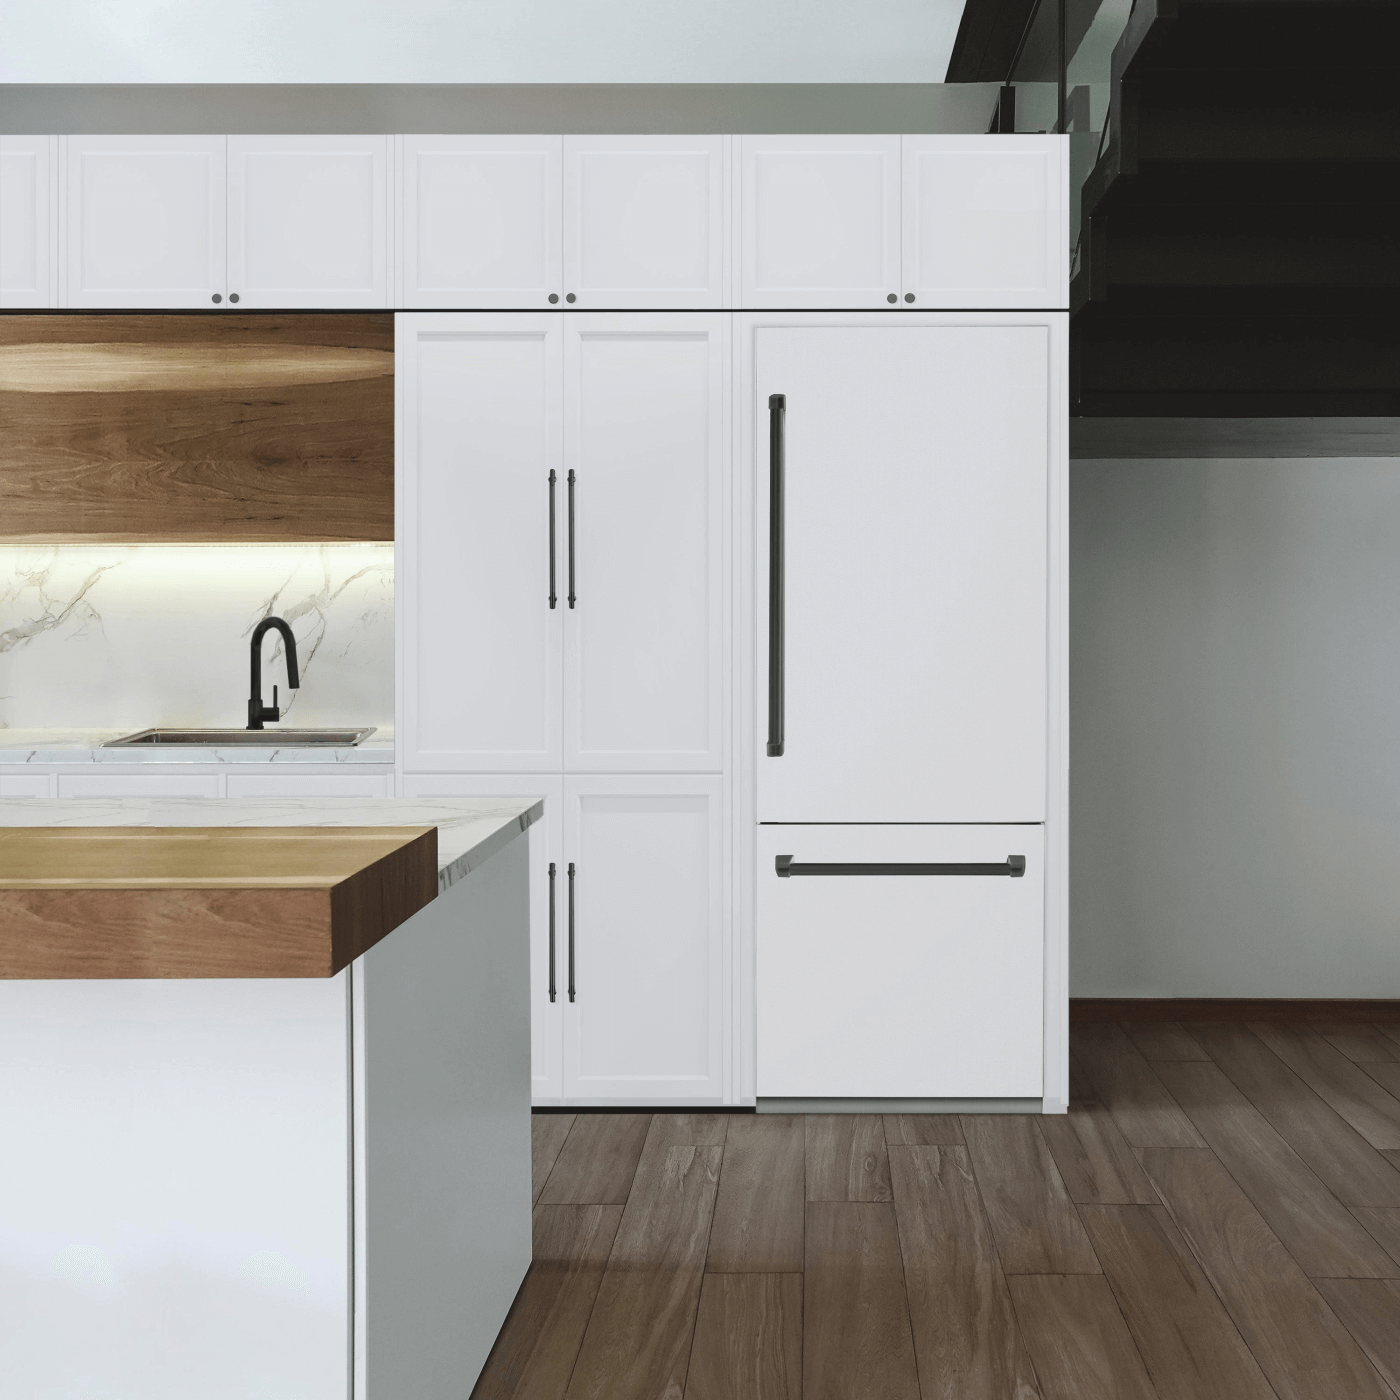 ZLINE 30 in Built-in Refrigerator in White Finish Lifestyle